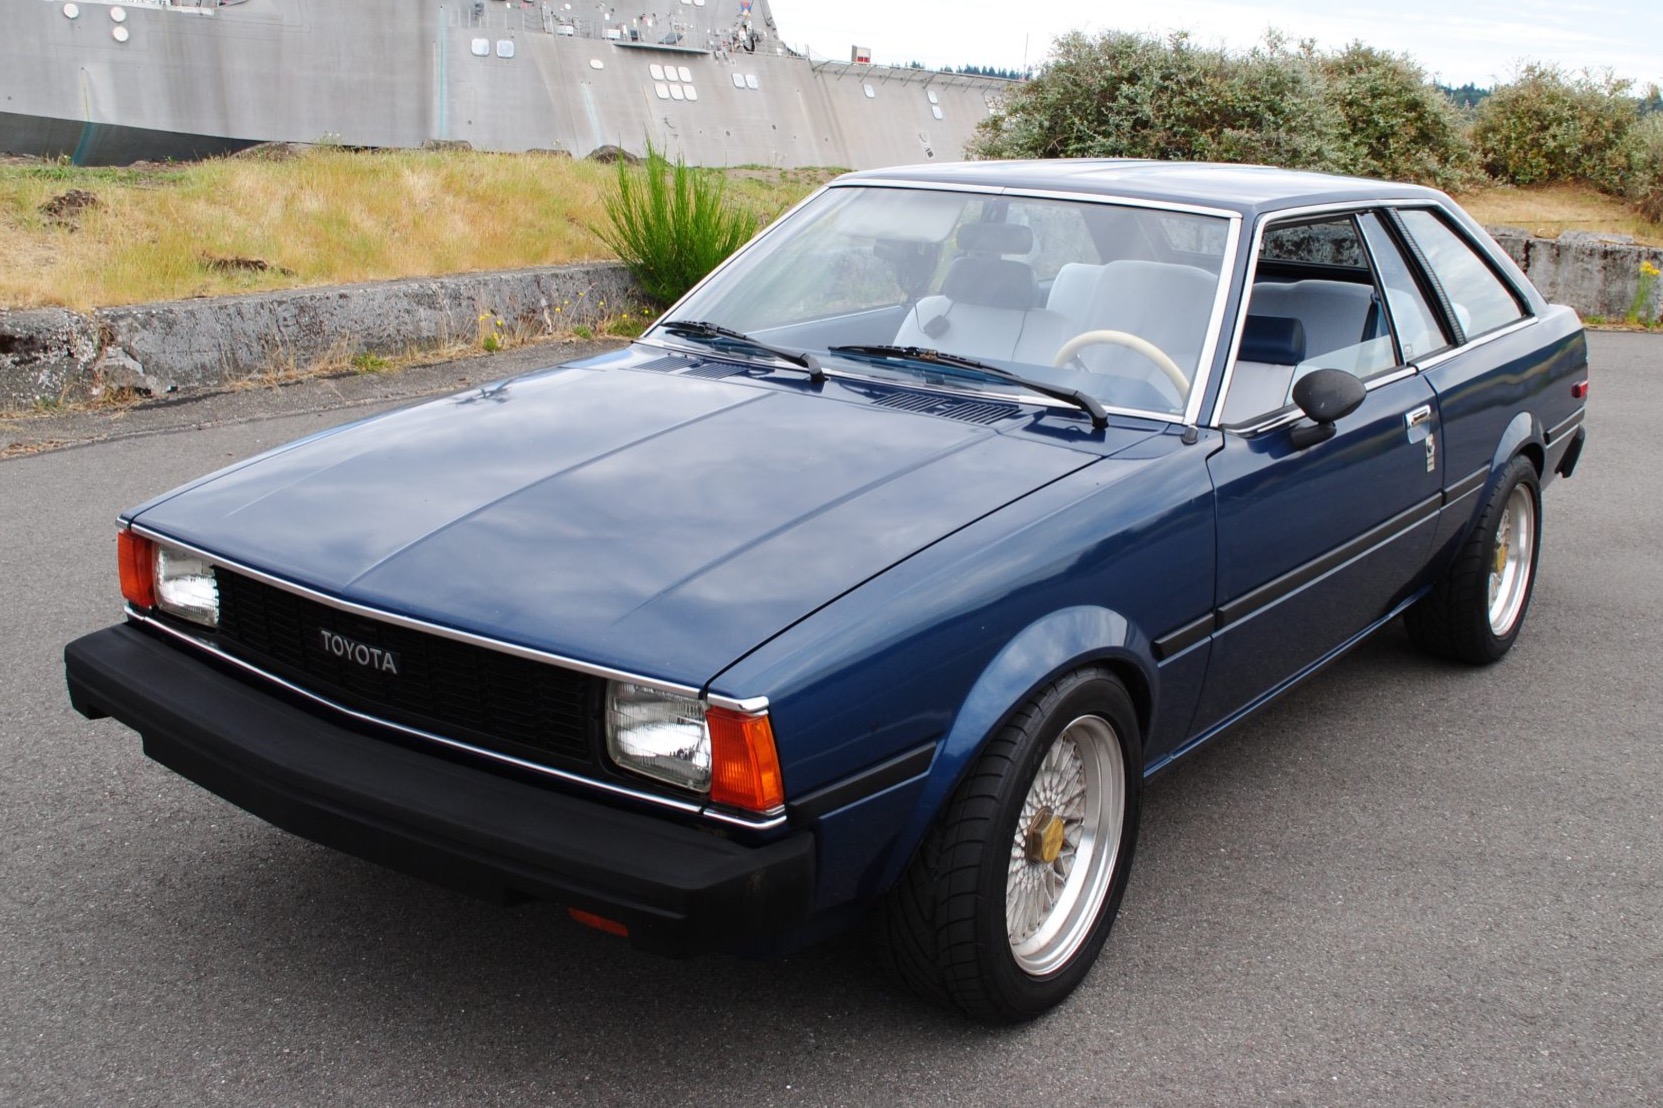 Used 1981 Toyota Corolla Deluxe Liftback Review